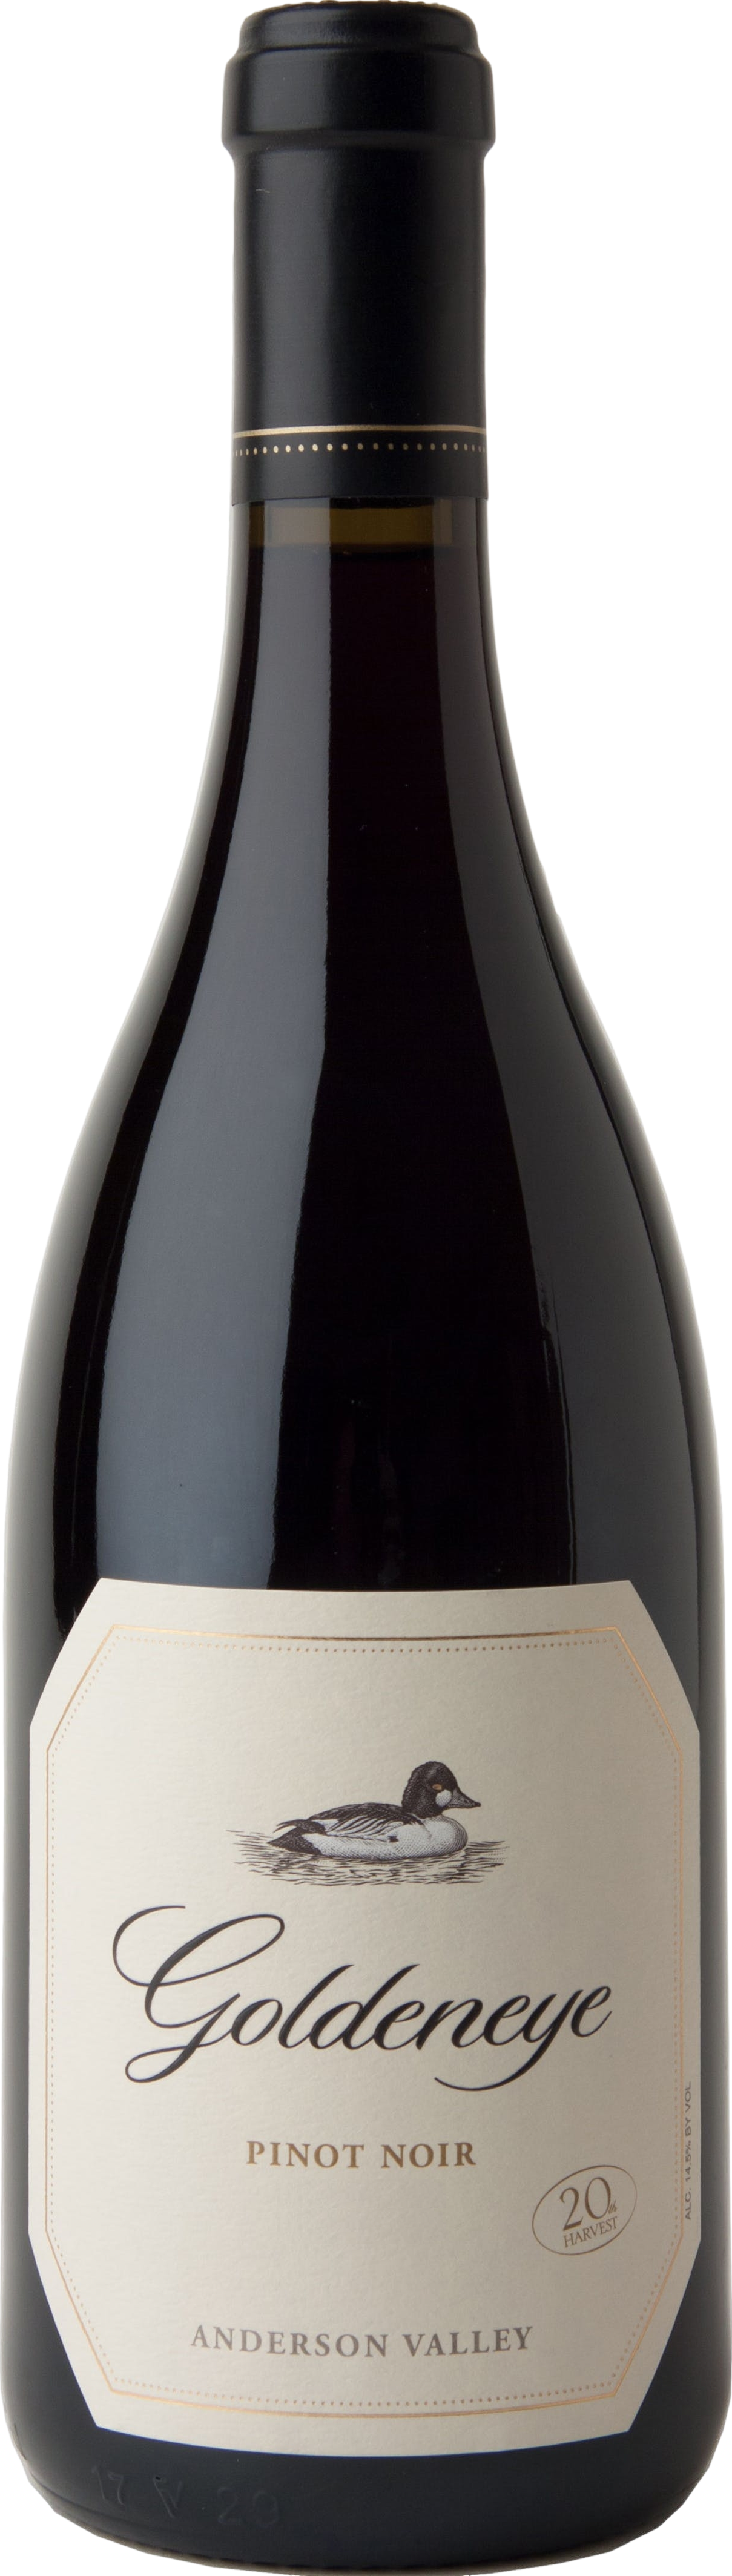 Duckhorn Pinot Noir Goldeneye 2019 Červené 14.5% 0.75 l